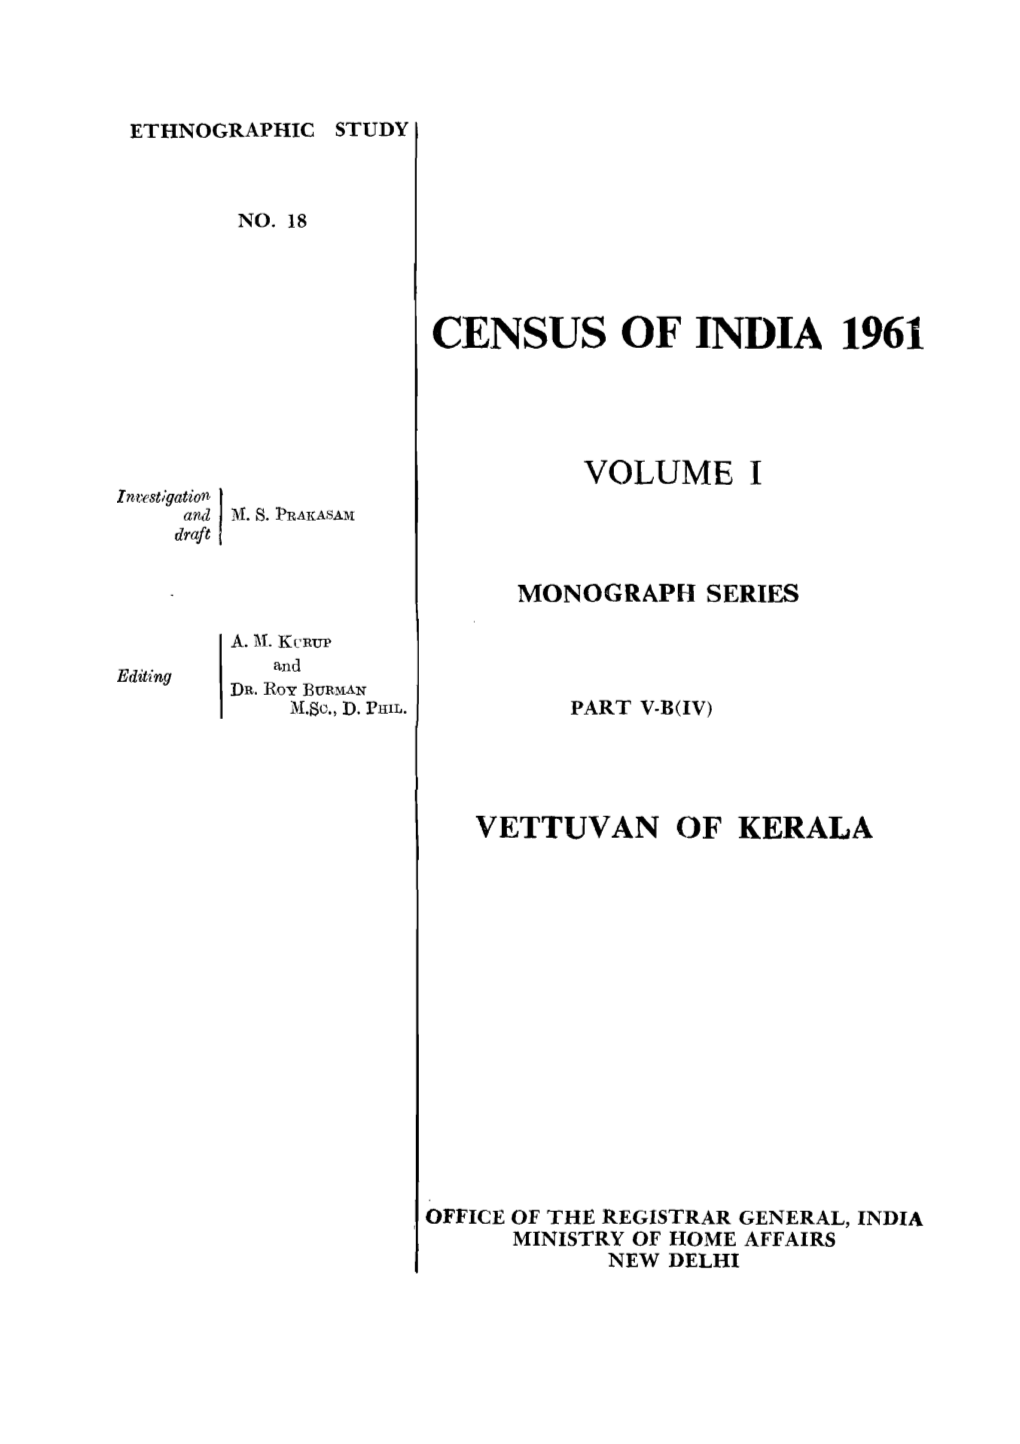 Monograph Series, Vettuvan of Kerala, Part VB(IV)